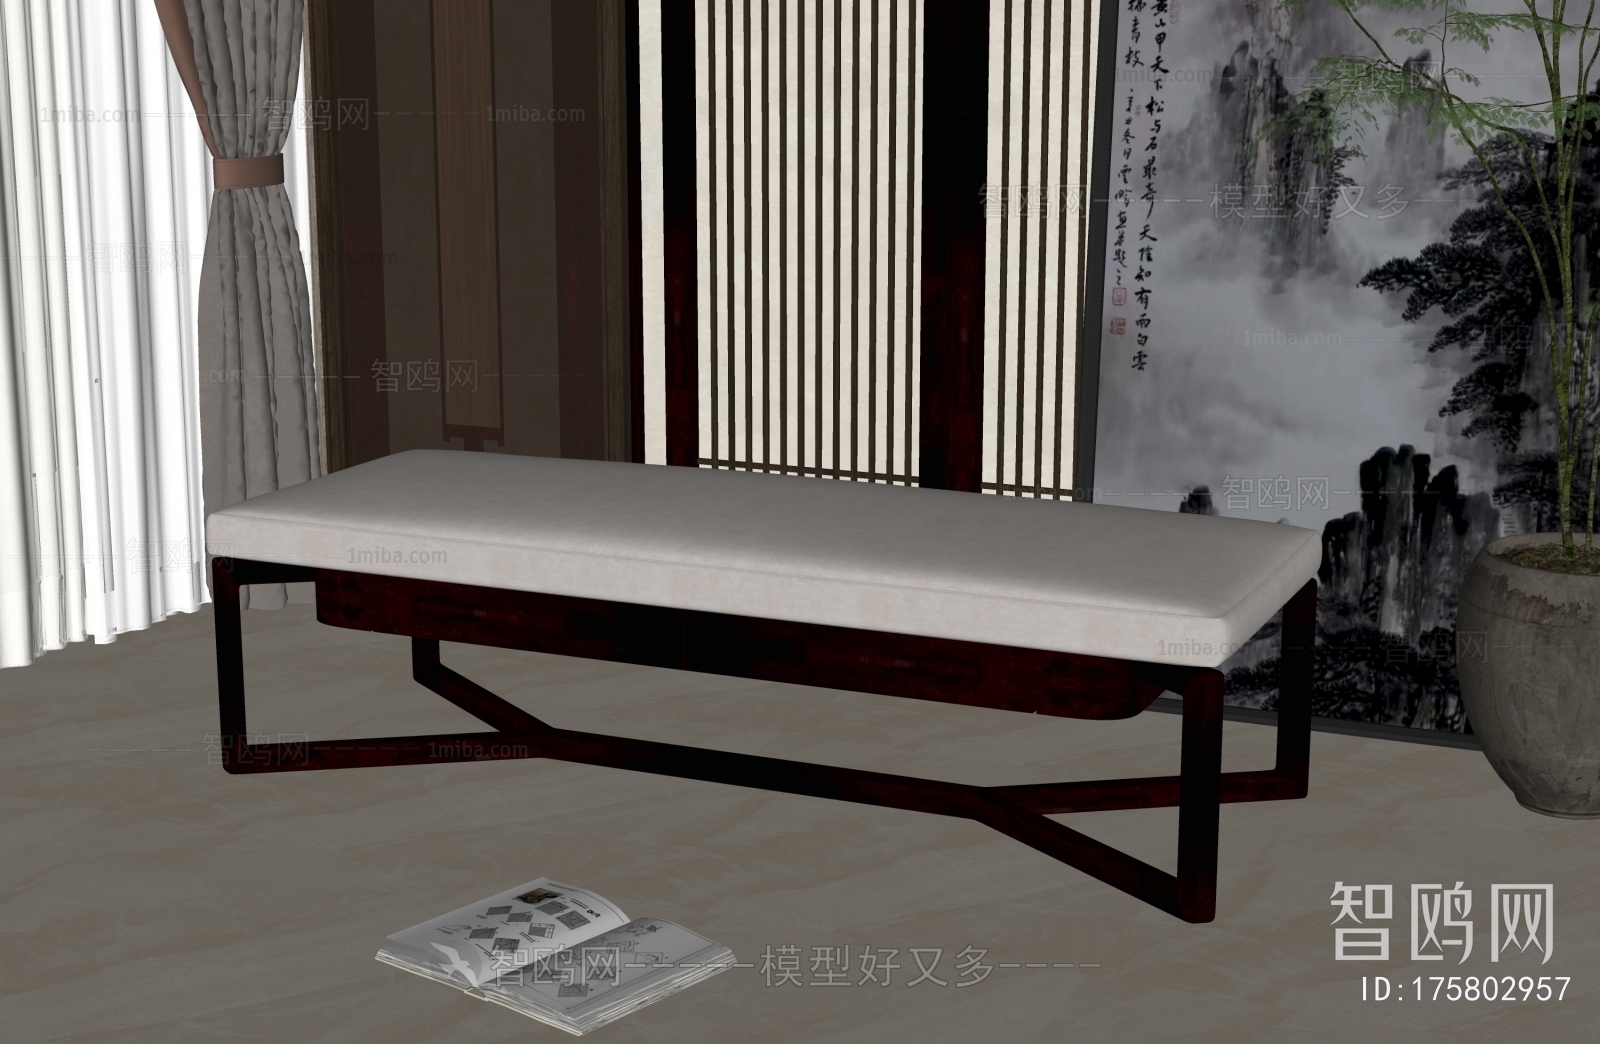 New Chinese Style Sofa Stool